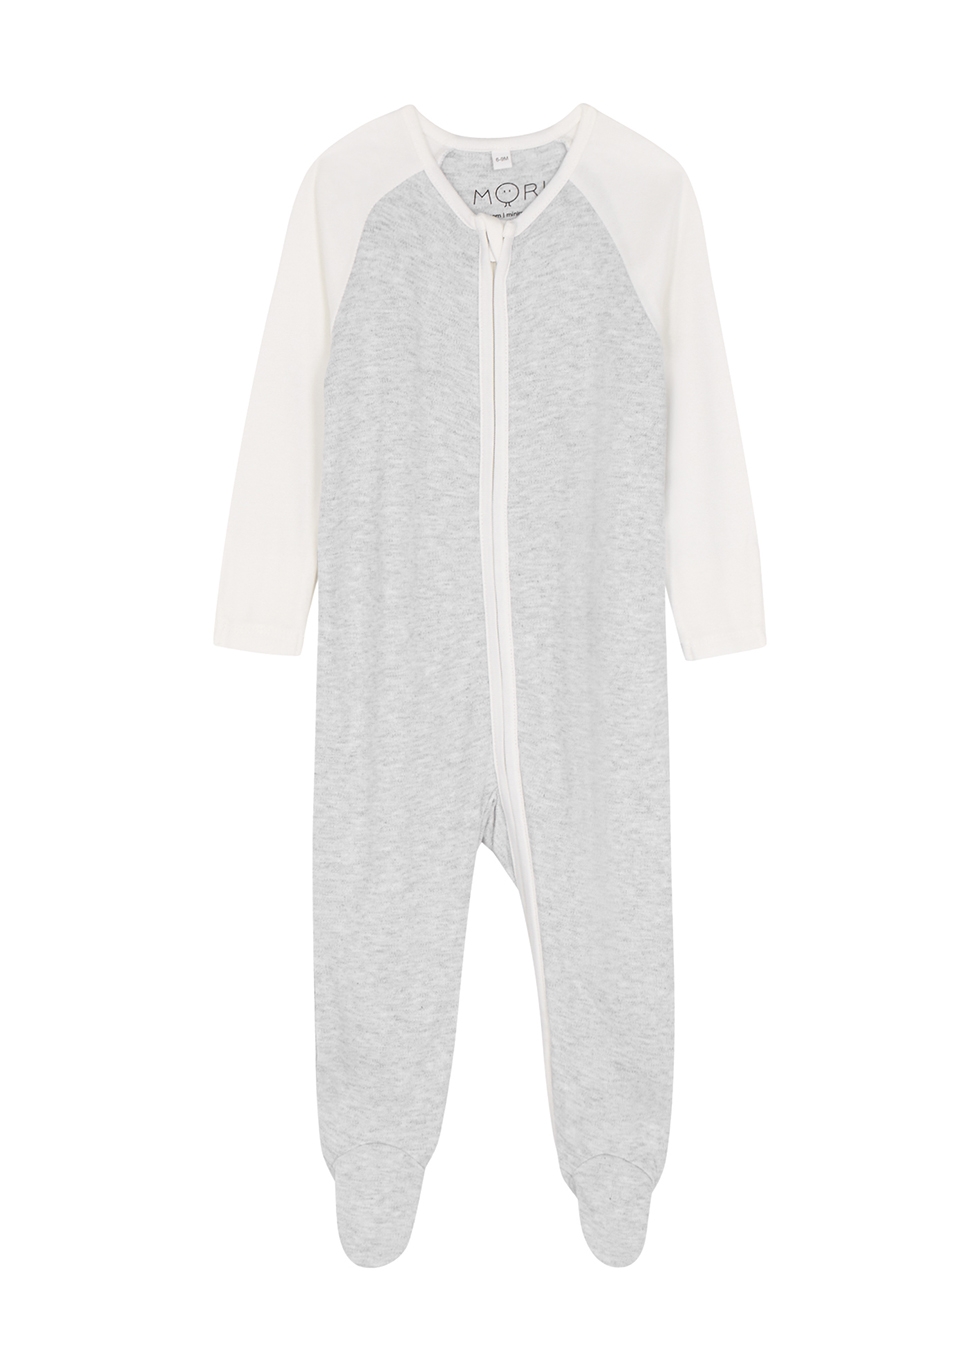 Mori Babies' Grey Mélange Jersey Sleepsuit